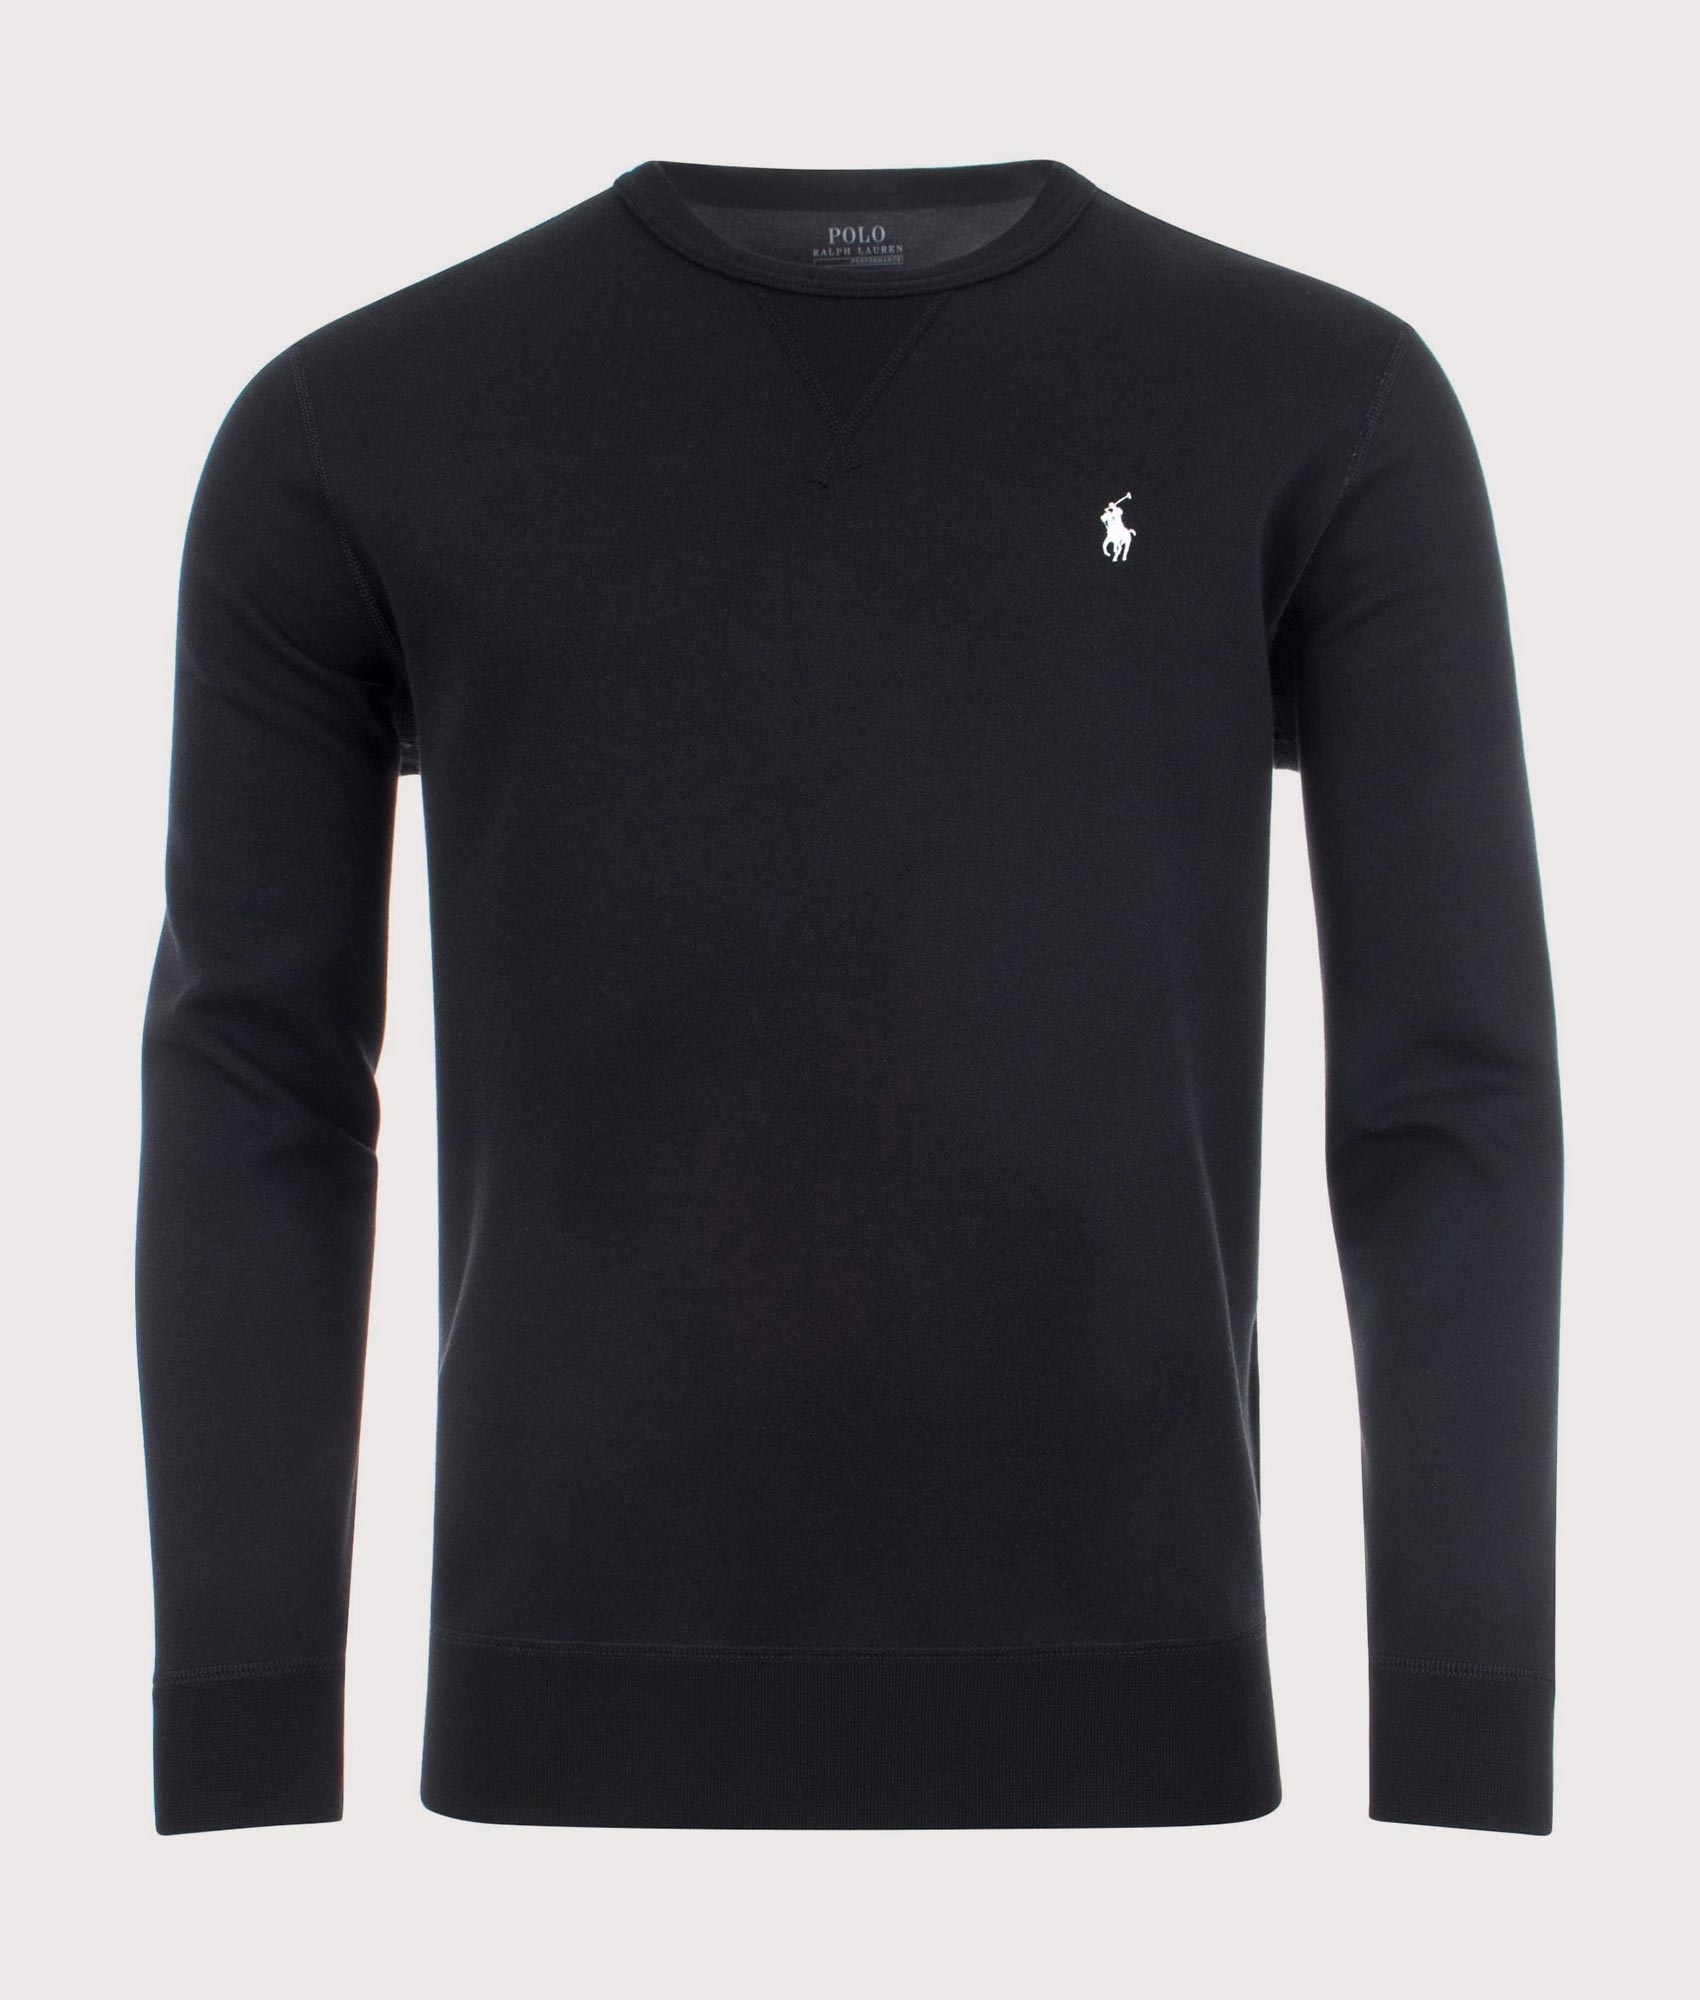 Double Knit Tech Sweatshirt Black/Cream | Polo Ralph Lauren | EQVVS